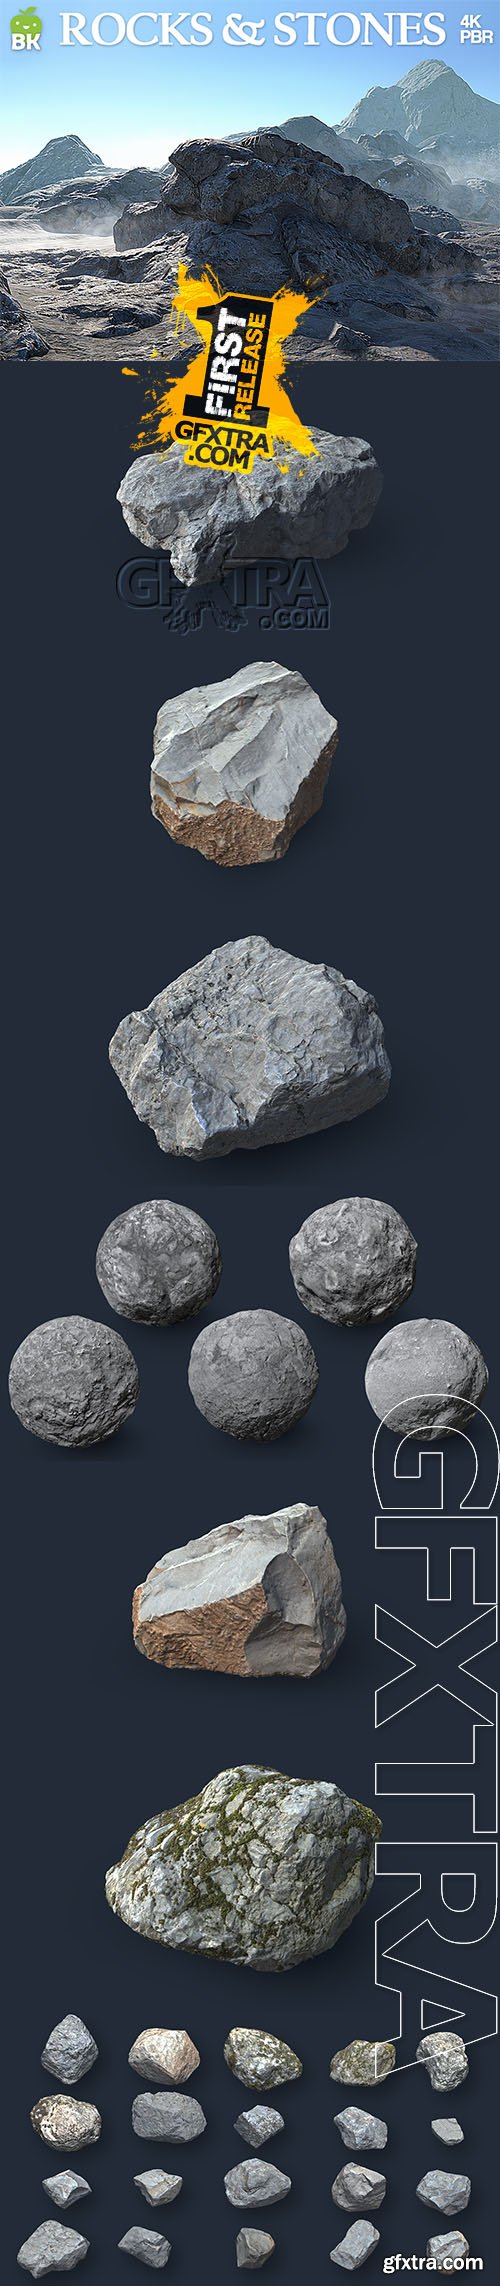 CubeBrush - BK - HD Rocks & Stones